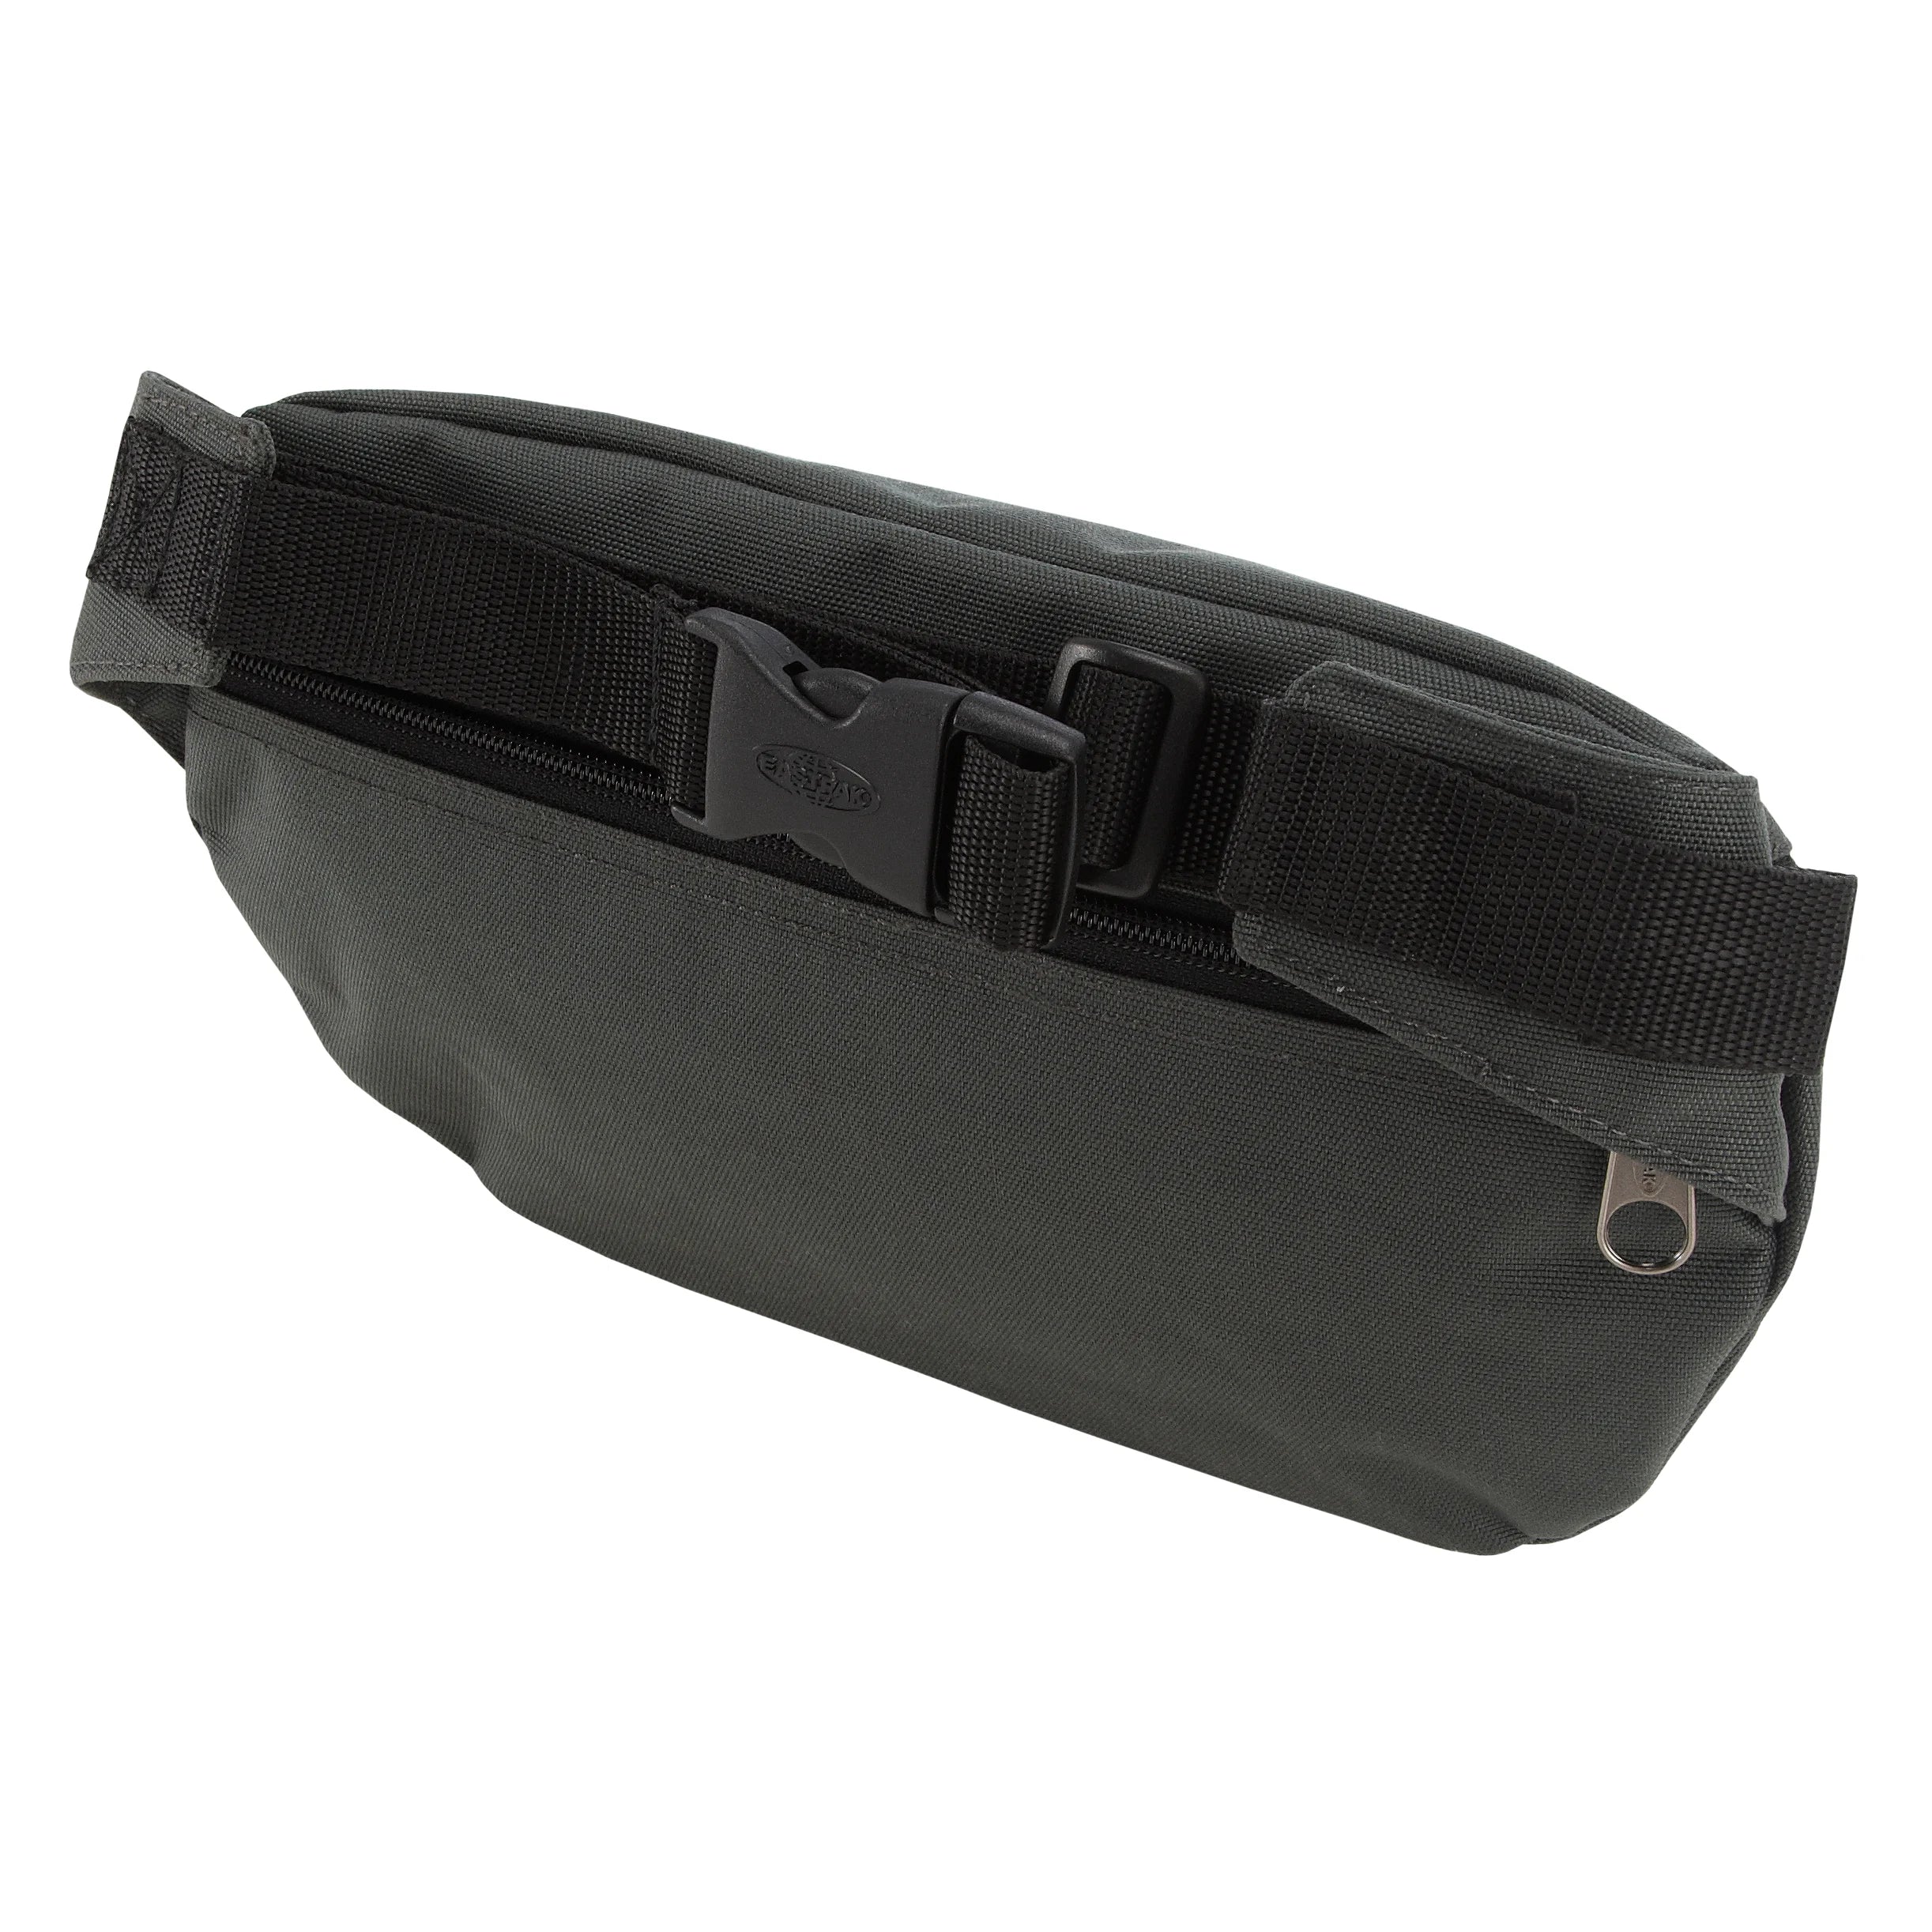 Eastpak Authentic Doggy Bag belt bag 25 cm - triple denim